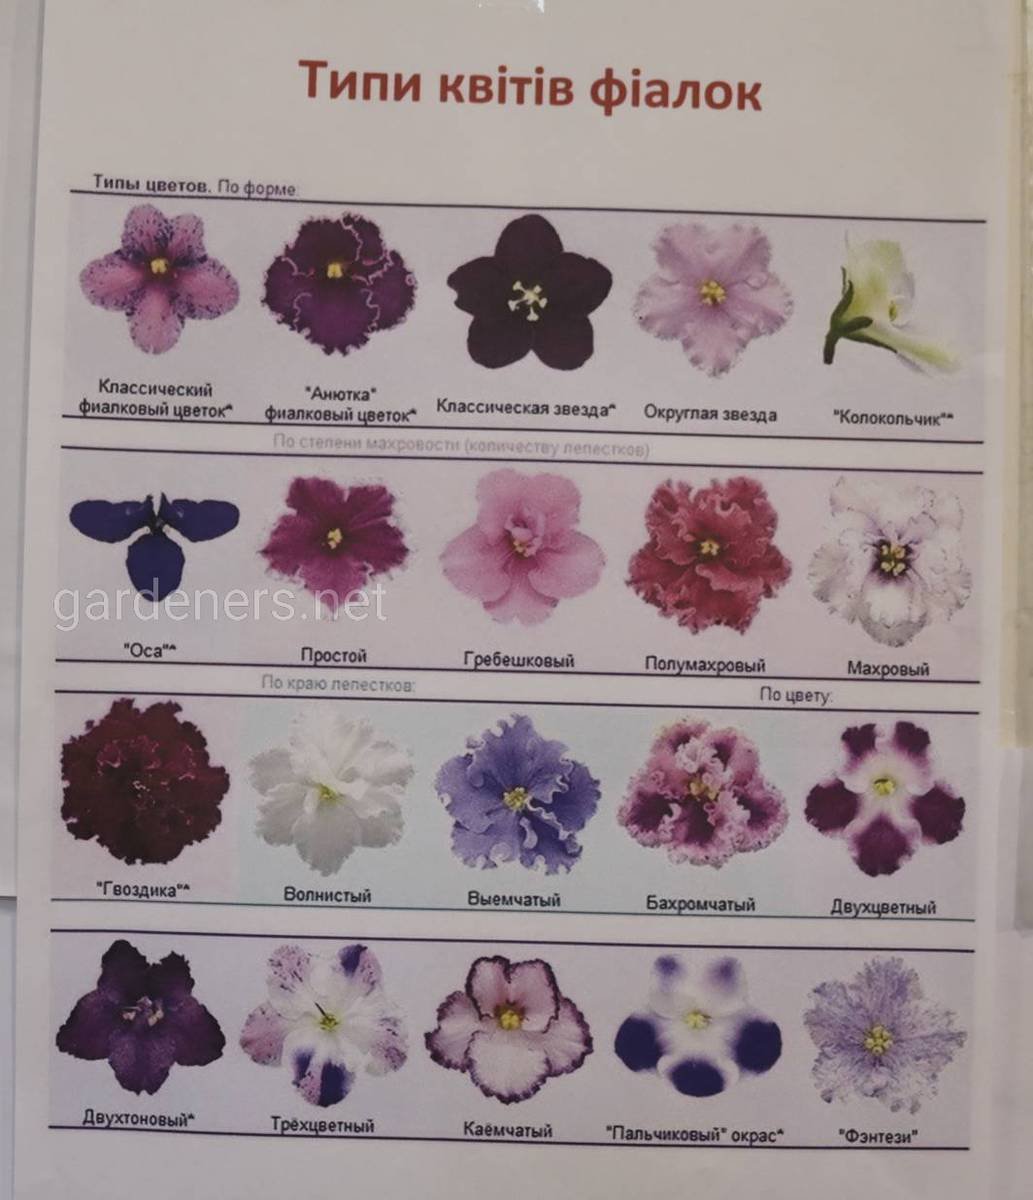 Классификация фиалок по типу цветка